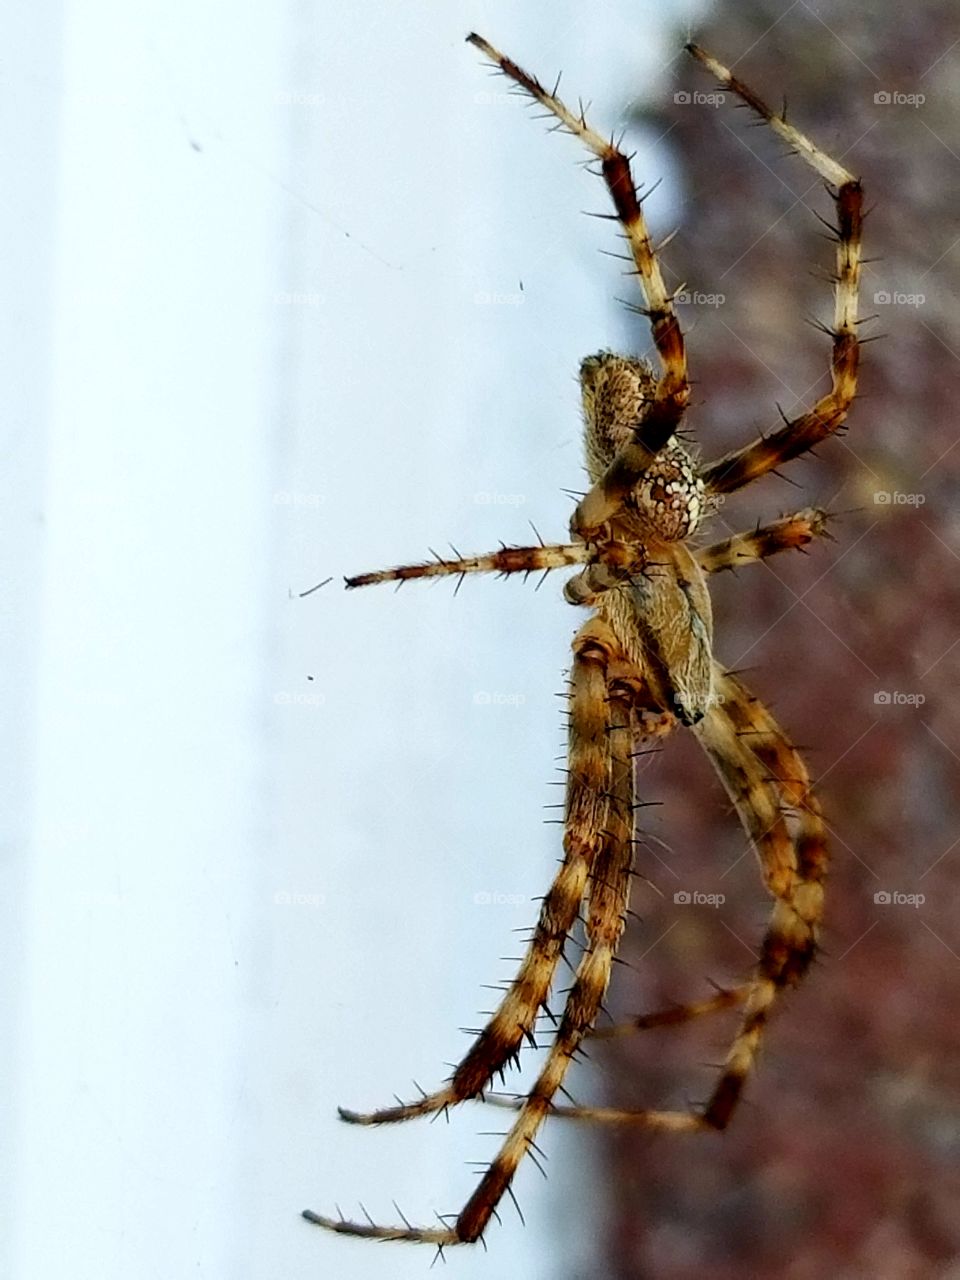 spider daytime beauty